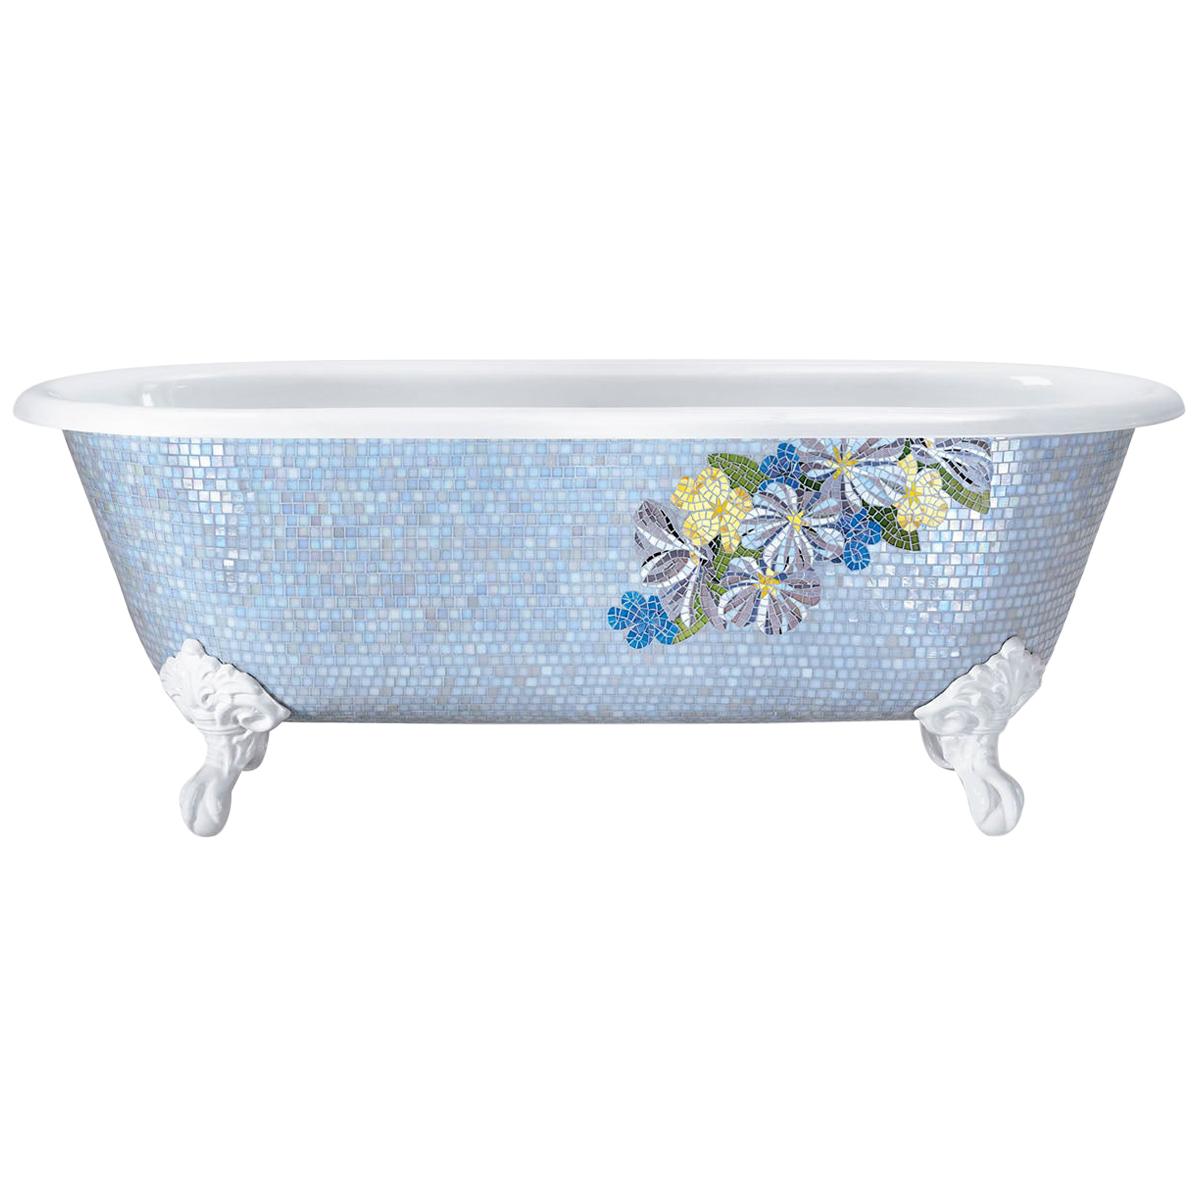 Beautiful Bathtub Petunia 1 Mosaic and Artistic Mosaic Decoration For Sale